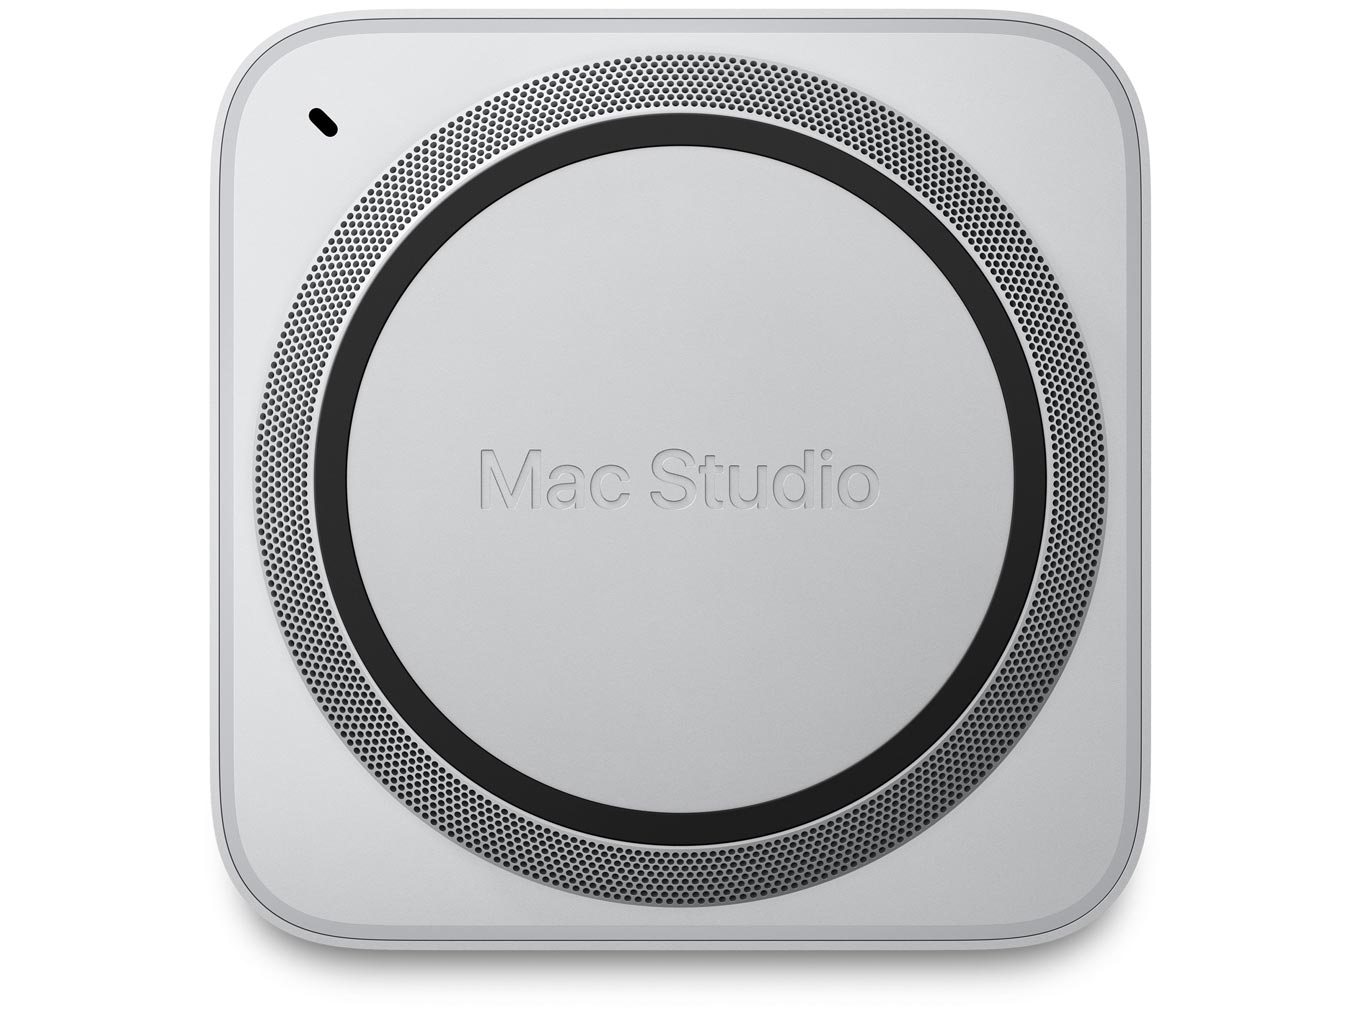 Mac Studio leasing